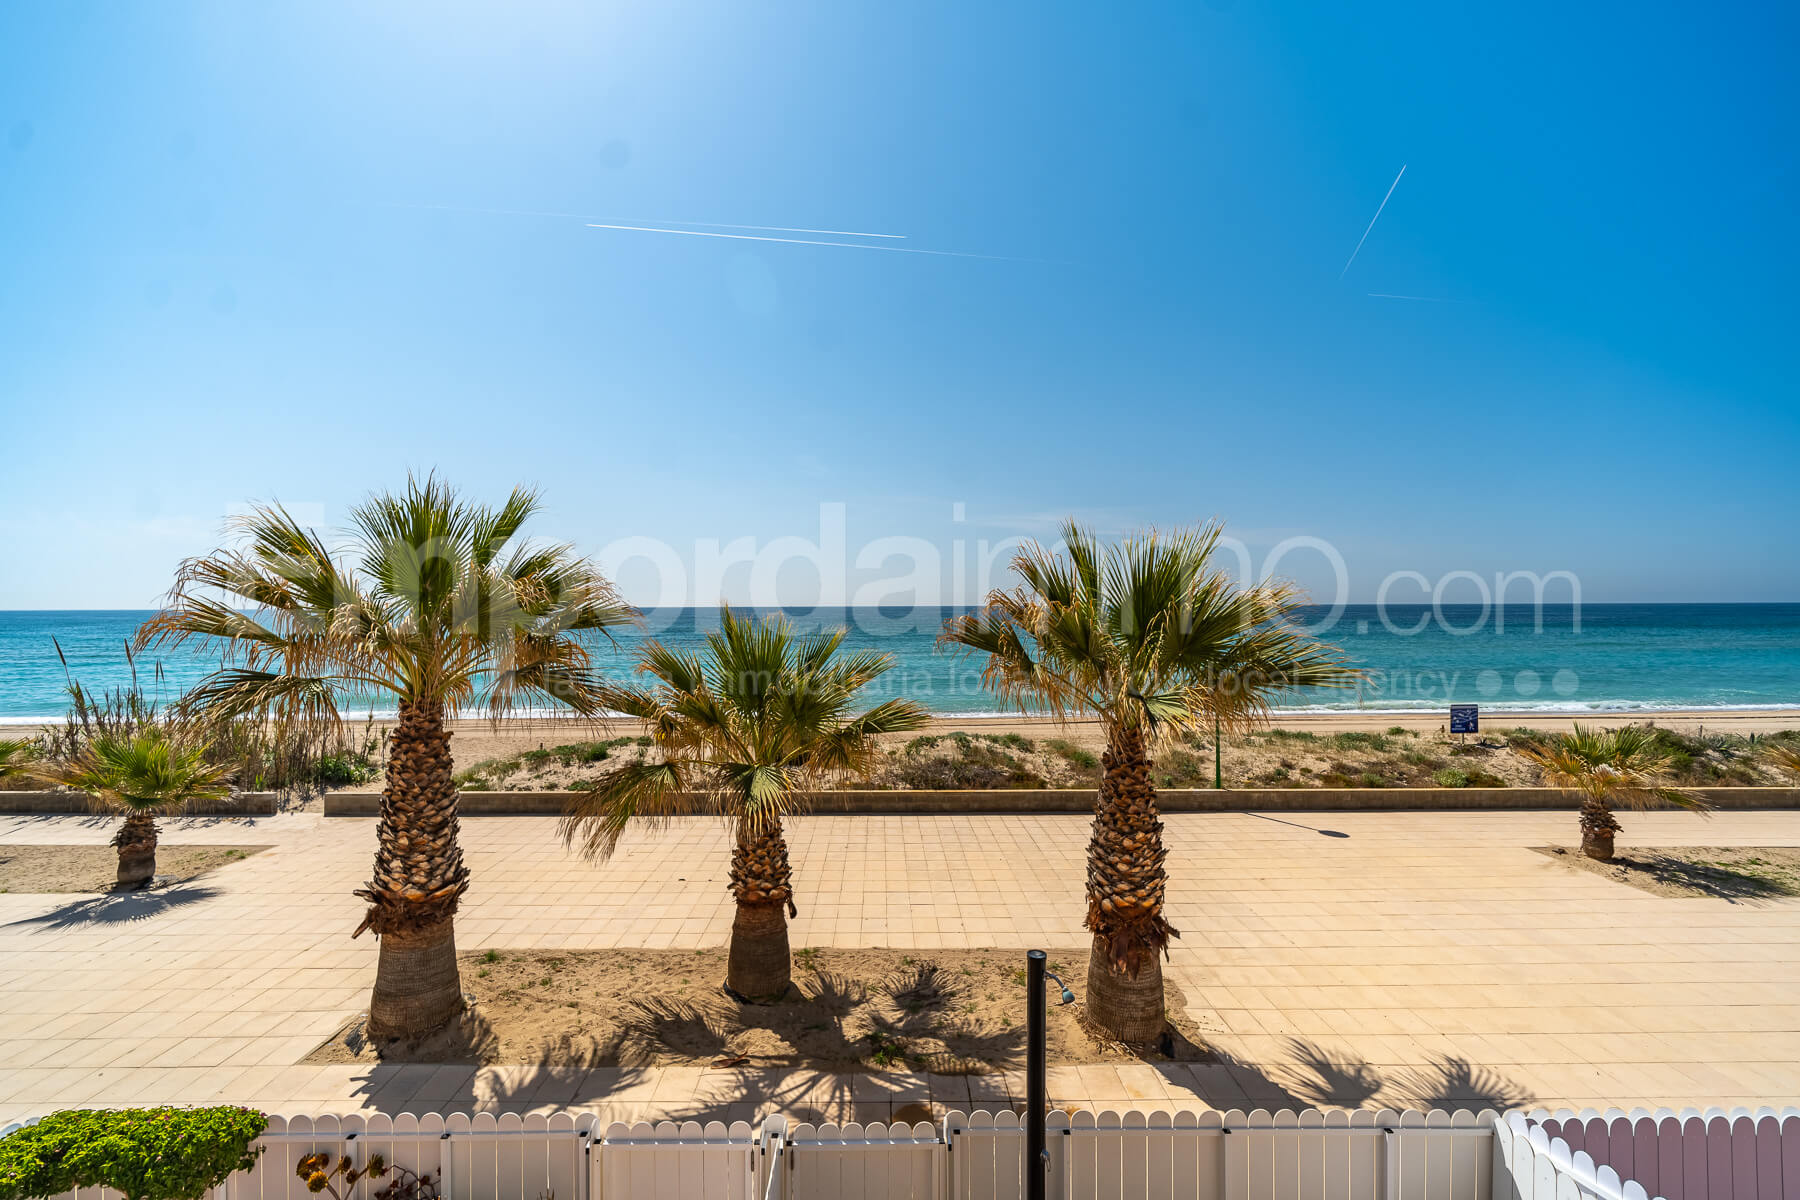 Casa en primera linea de mar en venta en Creixell - Tarragona